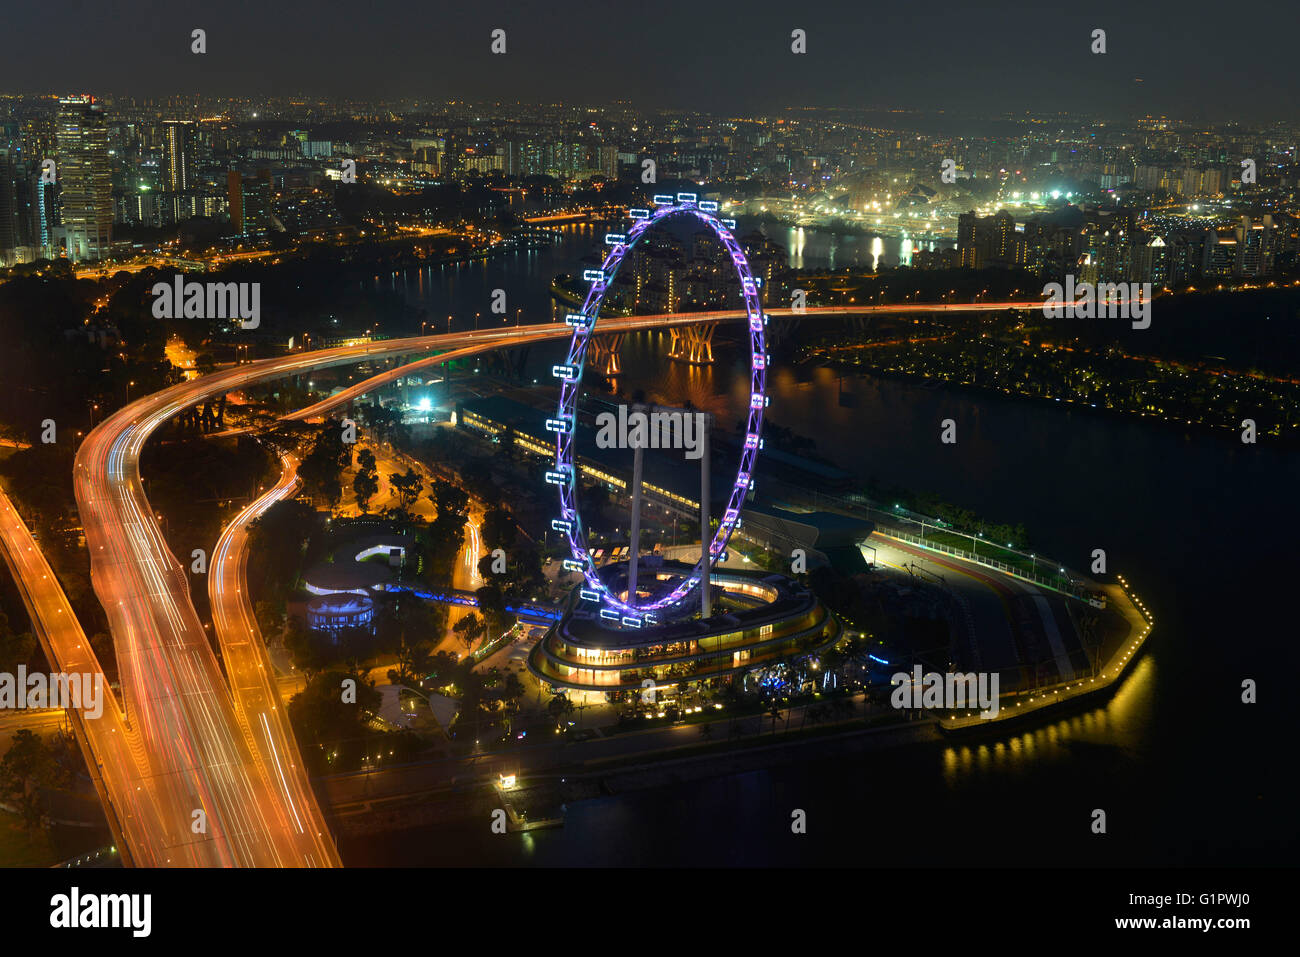 Ruota panoramica Ferris, Singapore Flyer, Singapore Foto Stock